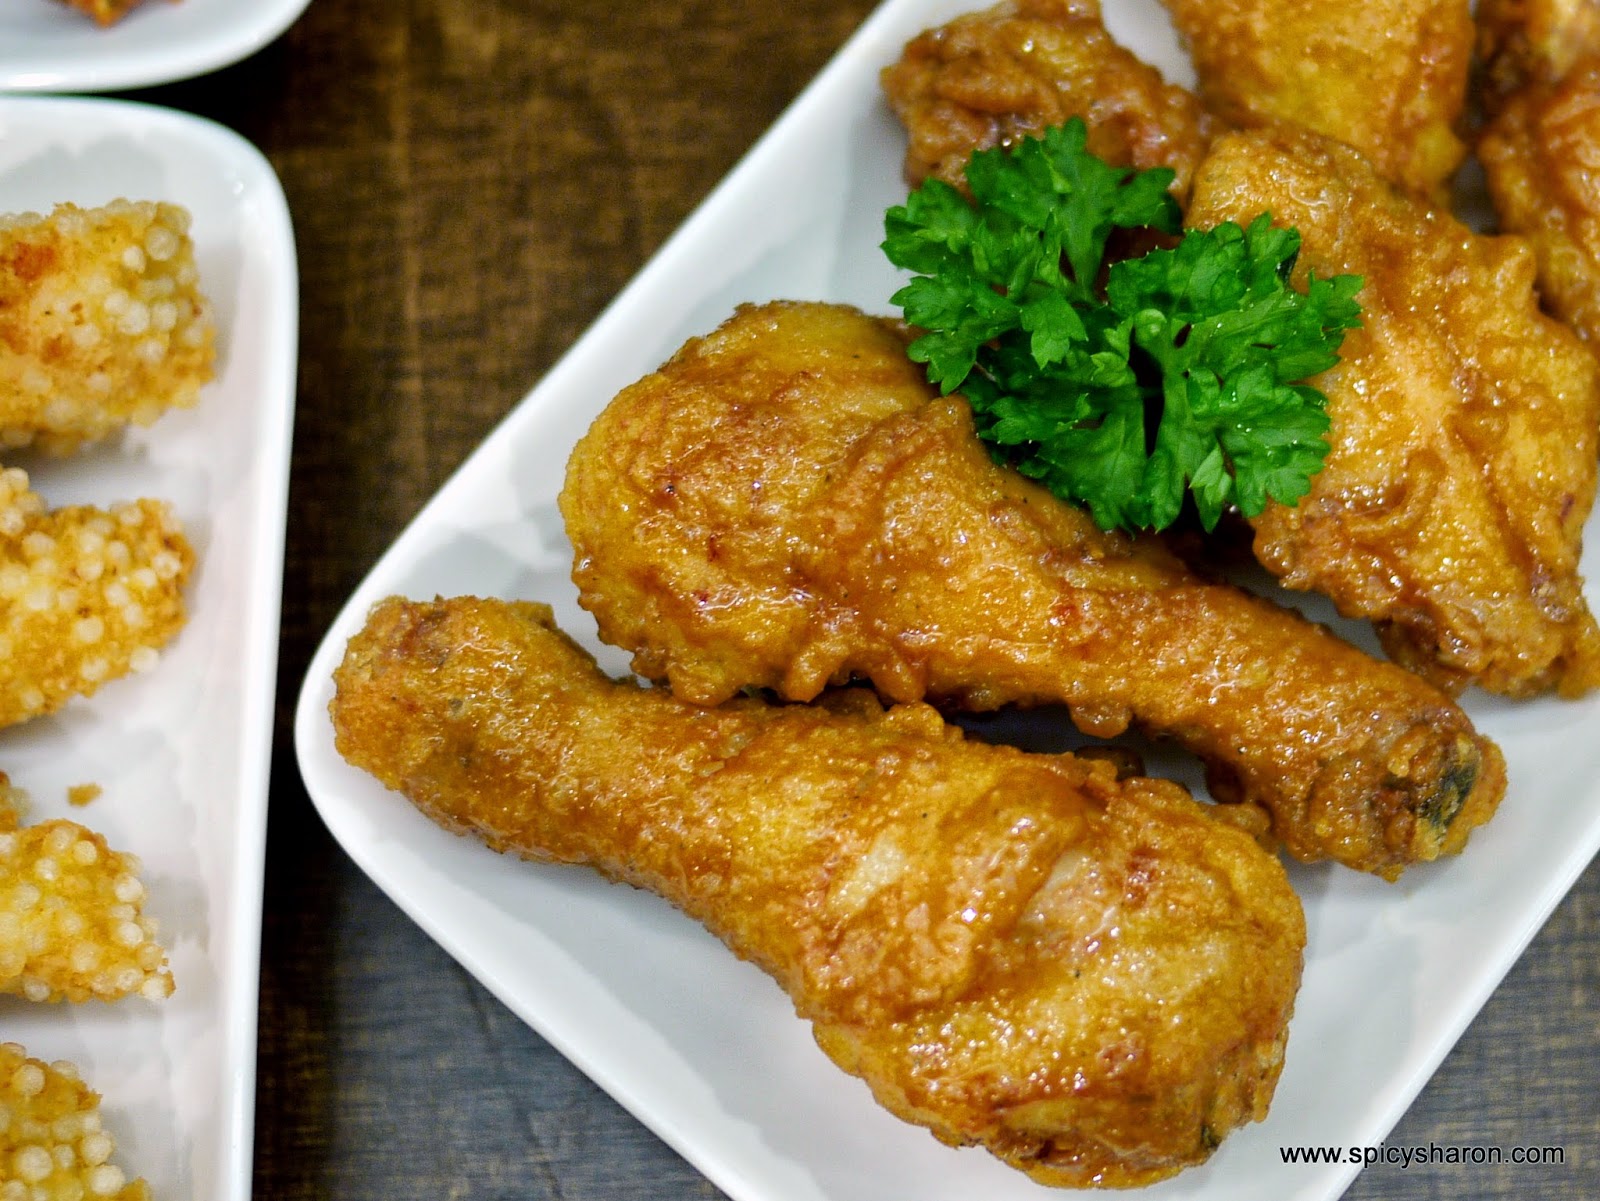 Kyochon Korean Fried Chicken @ 1 Utama - The Amazing Honey Chicken ...